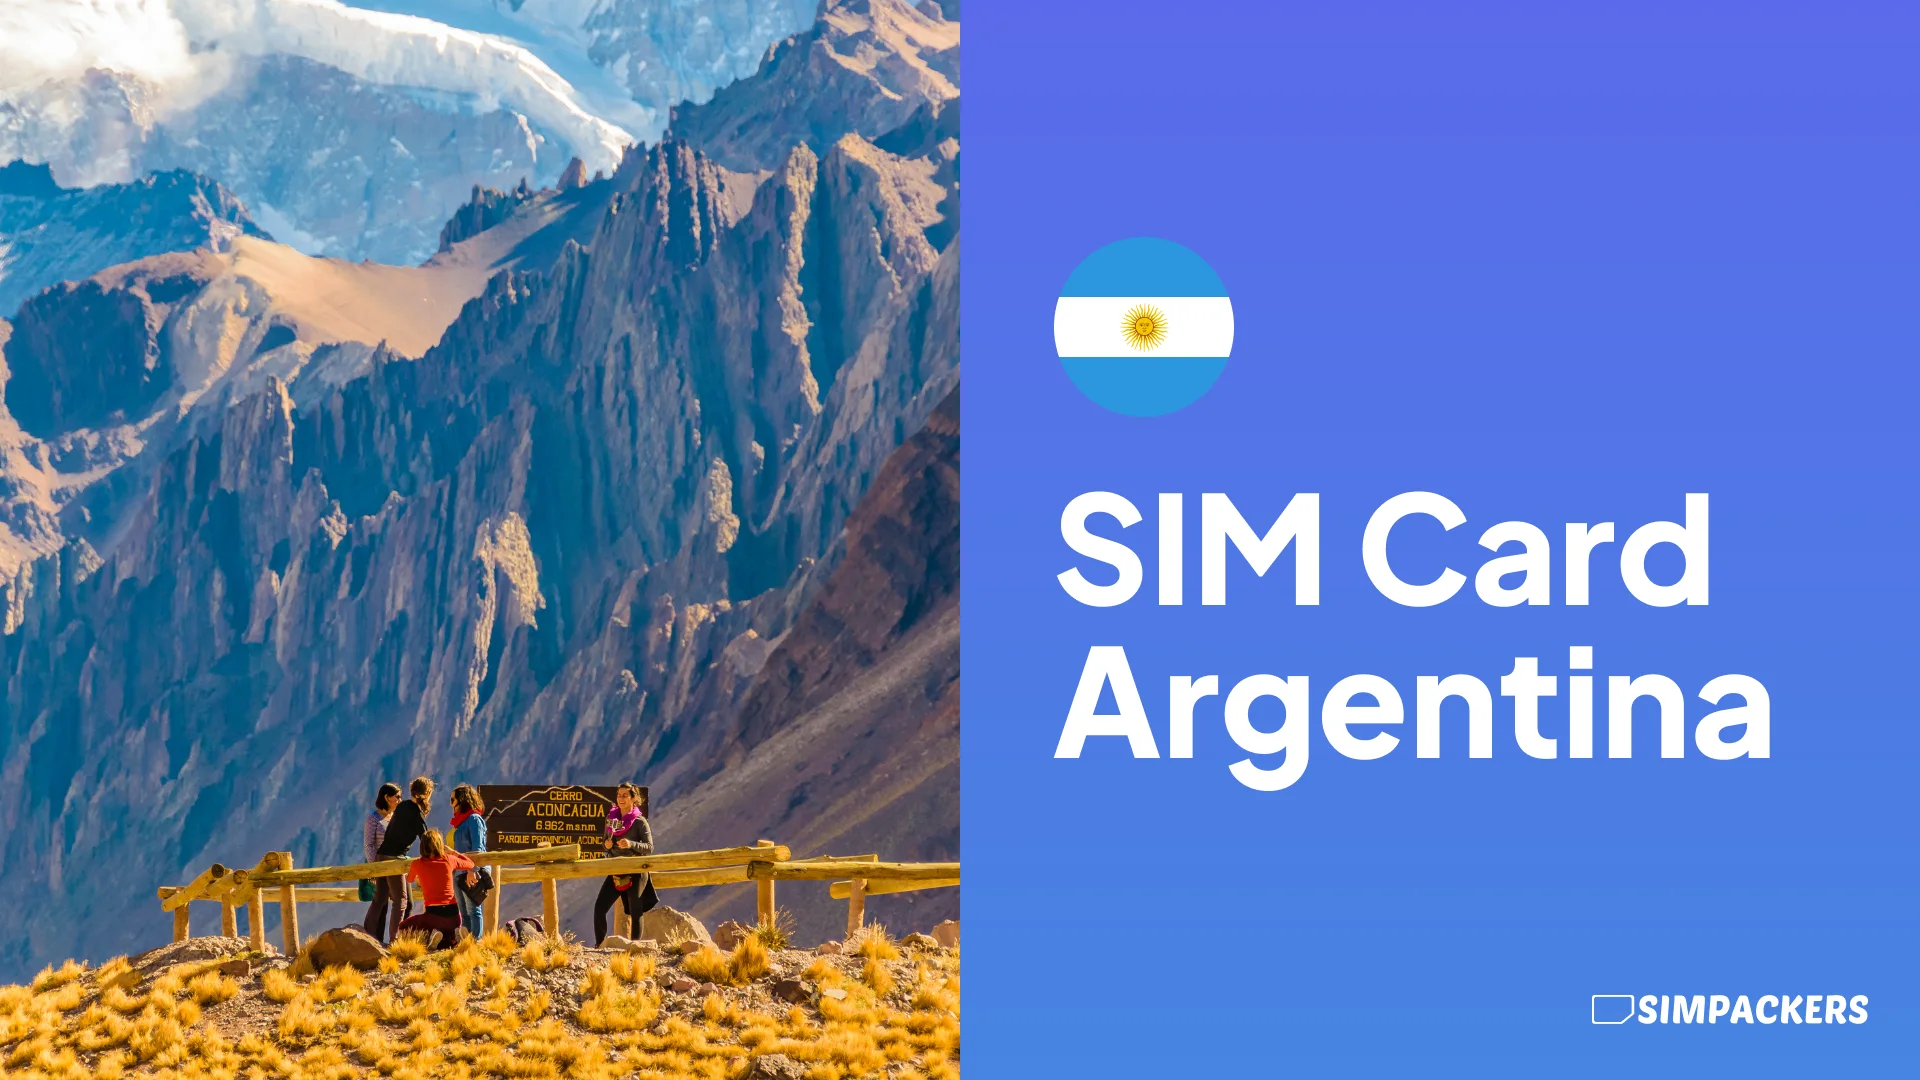 EN/FEATURED_IMAGES/sim-card-argentina.webp